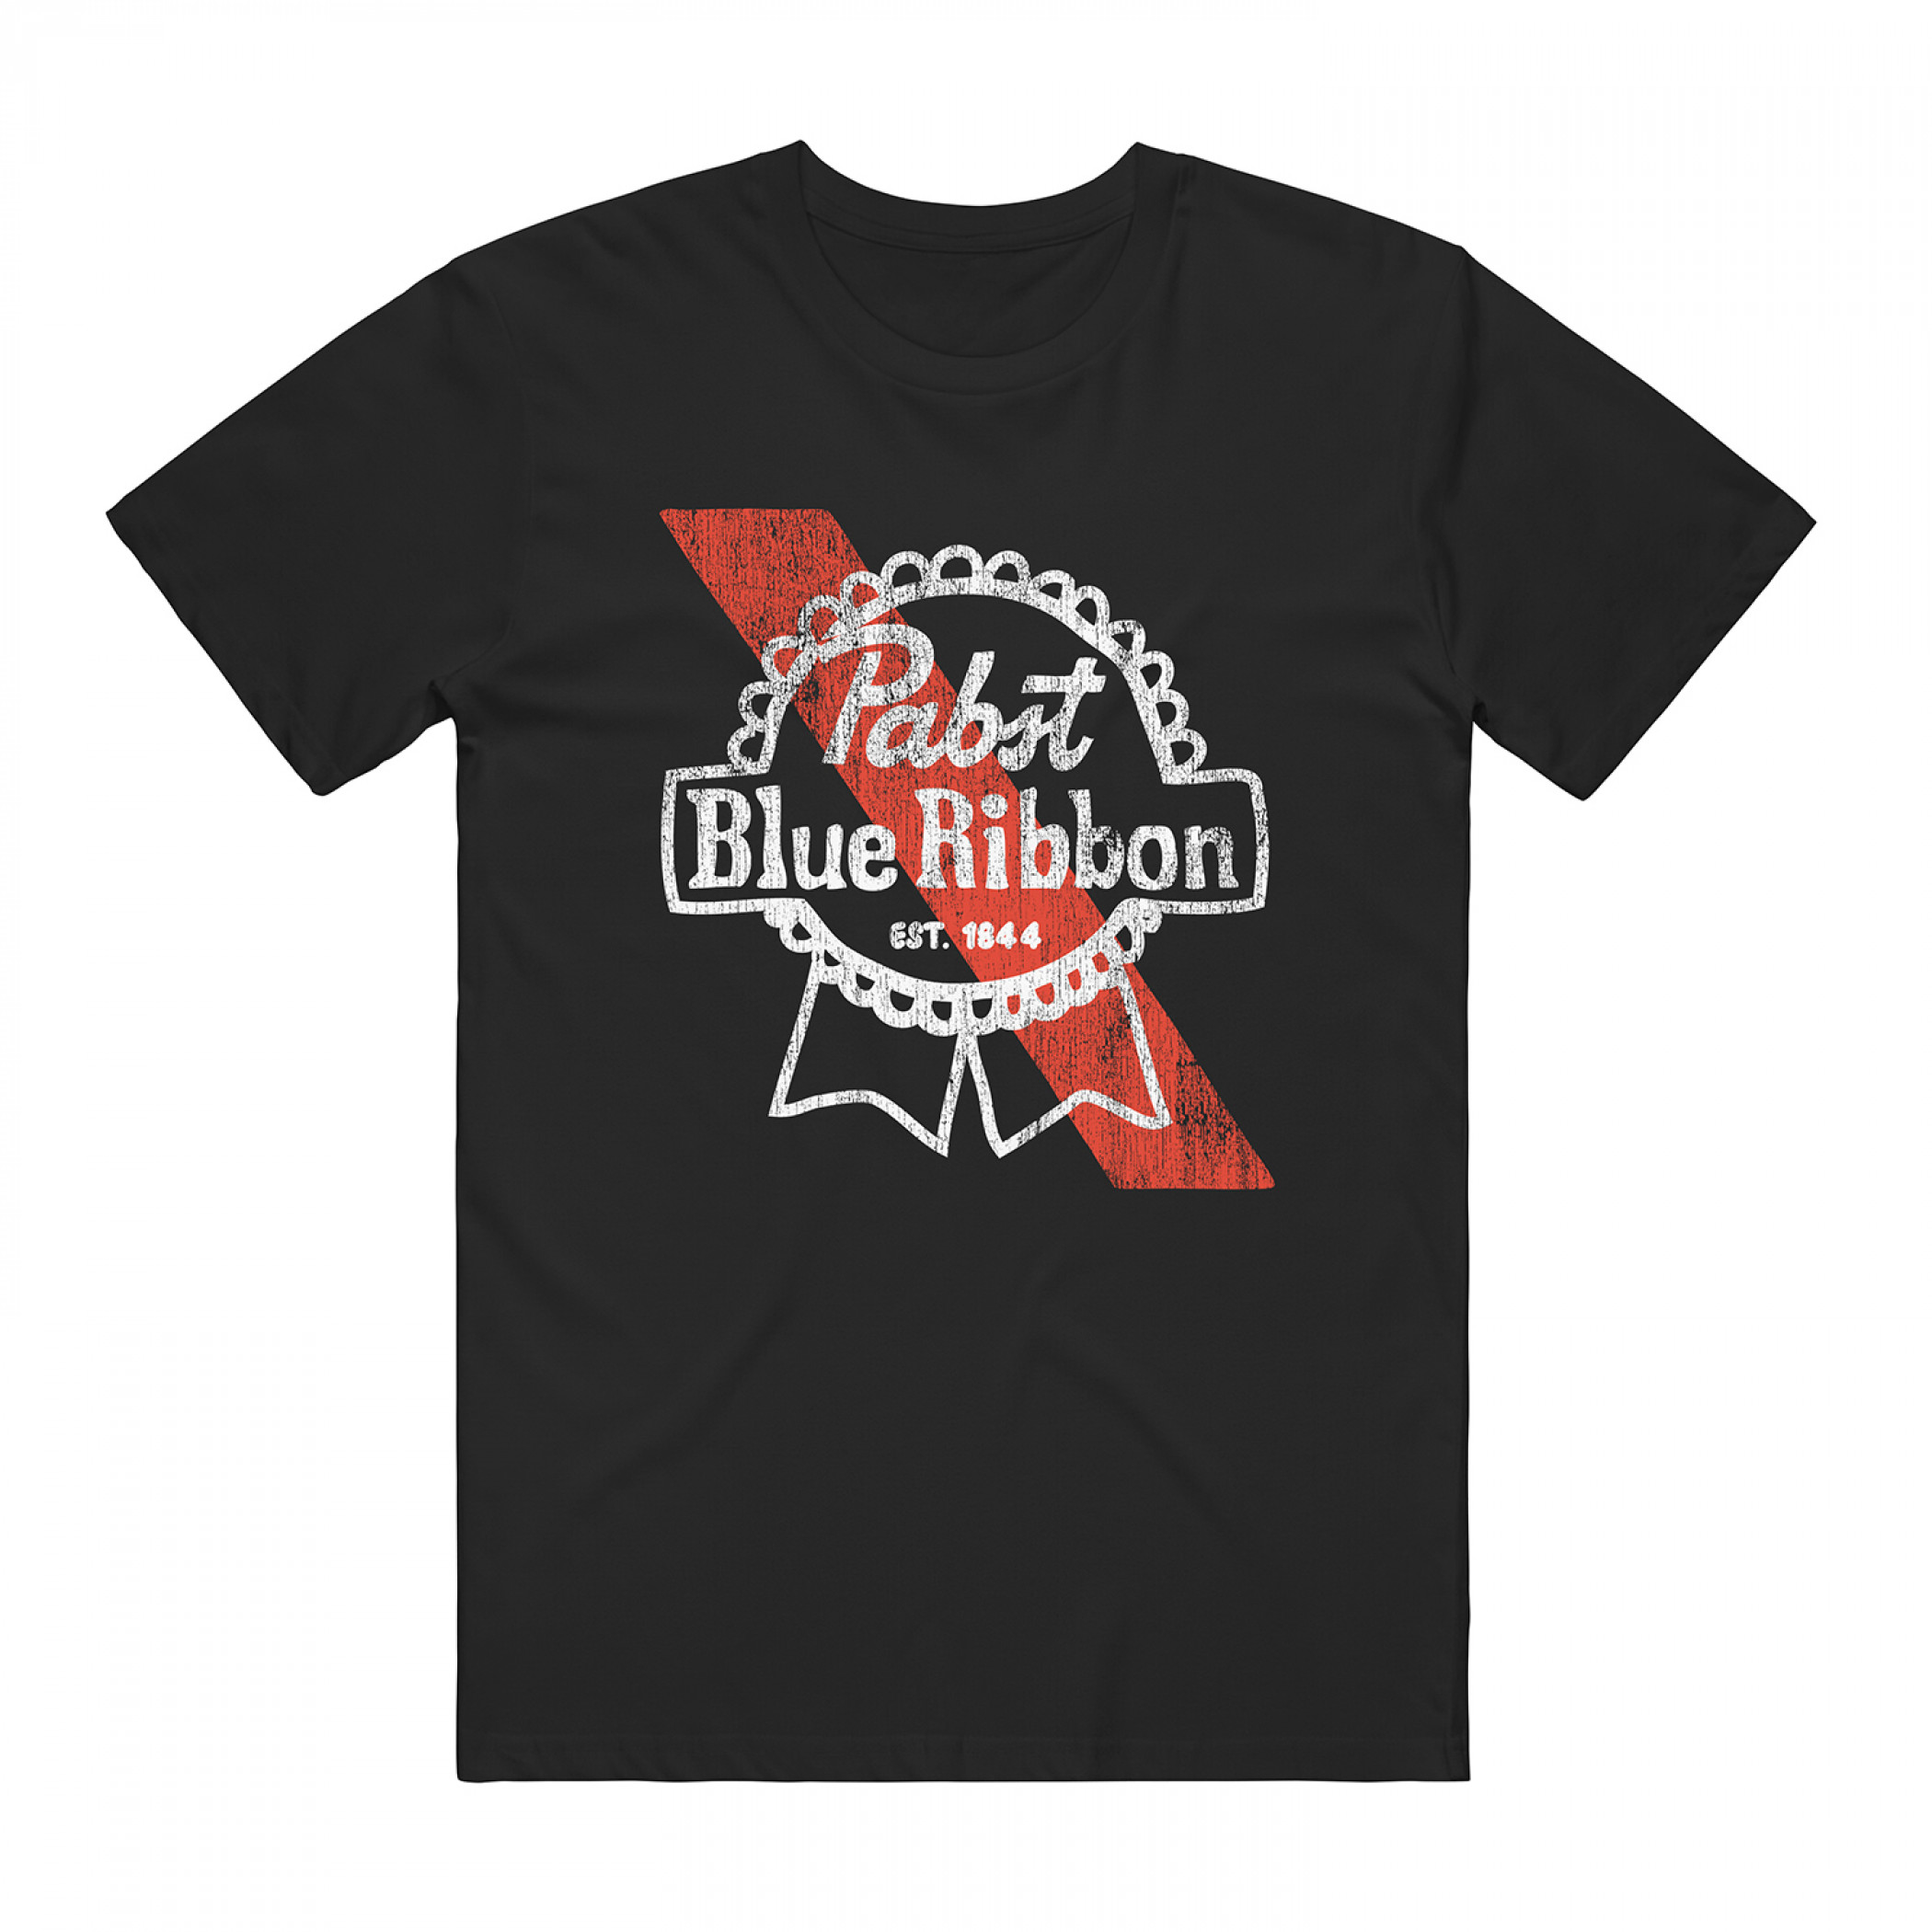 Pabst Blue Ribbon (PBR) Vintage Distressed Logo Black Colorway T-Shirt